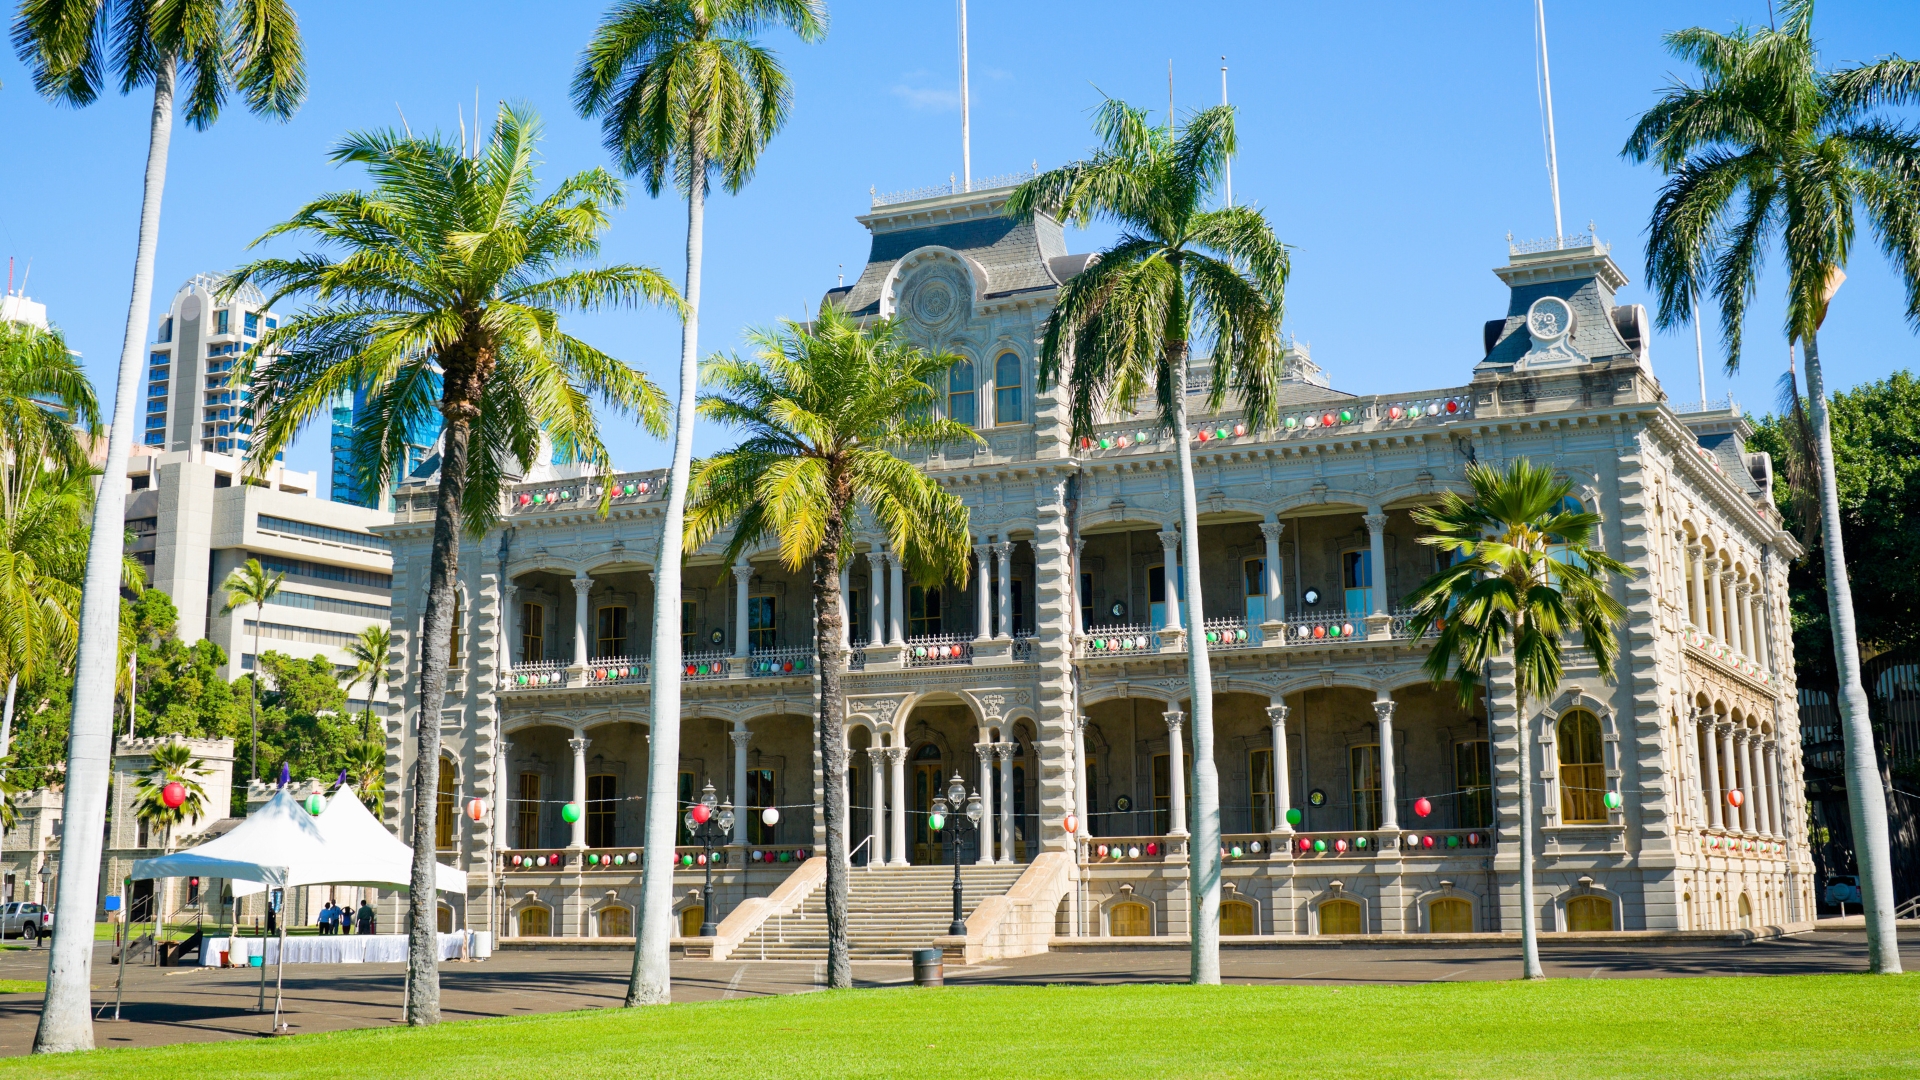 Iolani Palace - Downtown Honolulu - Historical Landmark